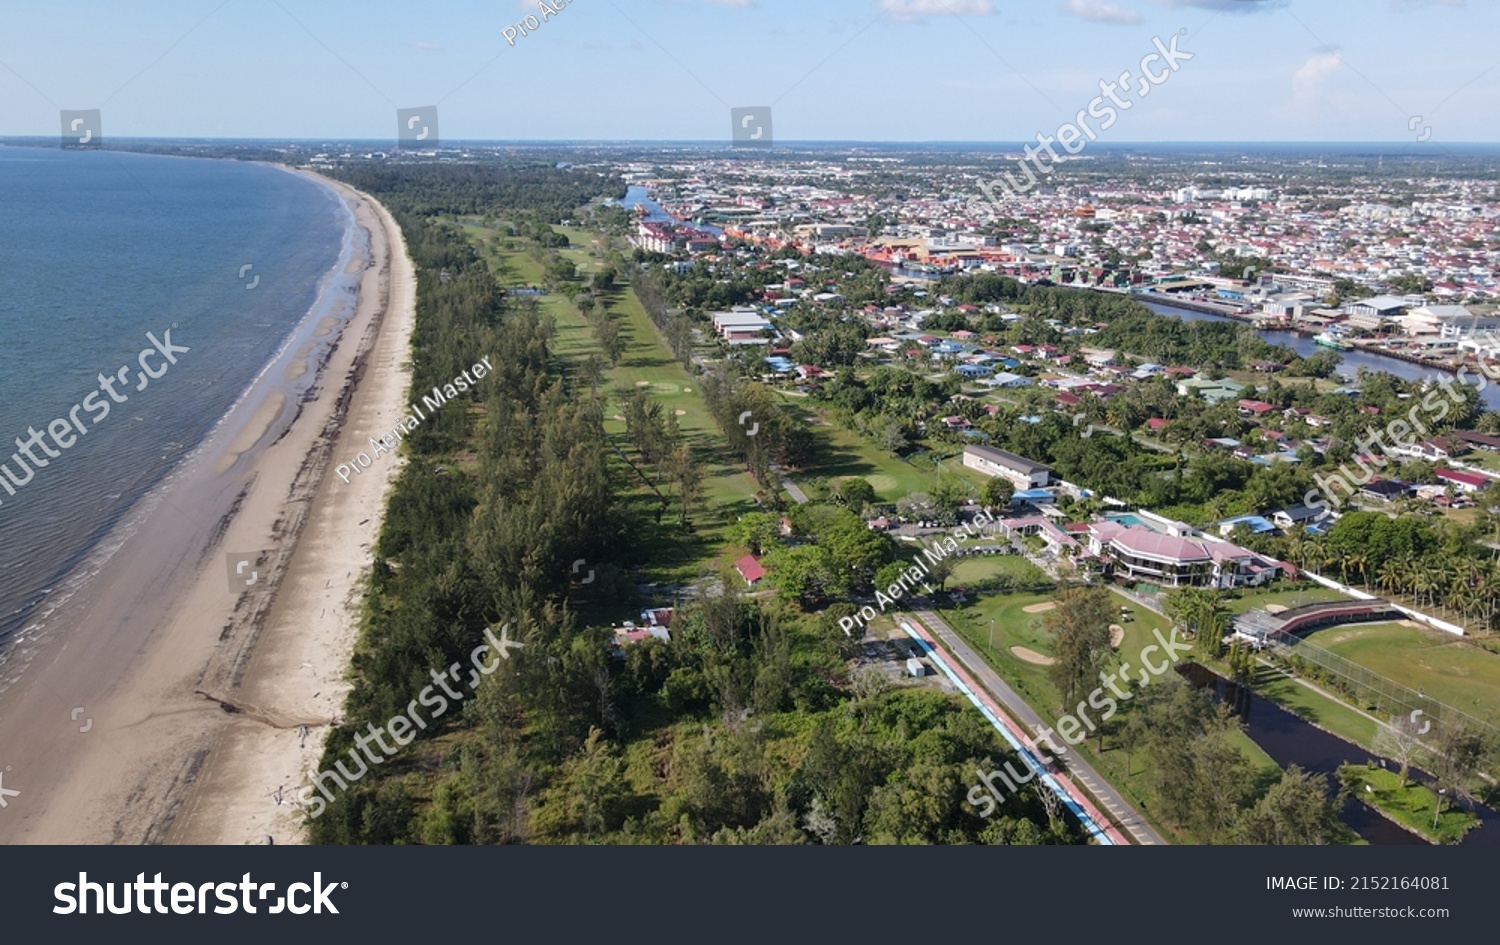 Stock Photo Miri Sarawak Malaysia May The Beautiful Coastal Town Of Miri City With Its Famous 2152164081 